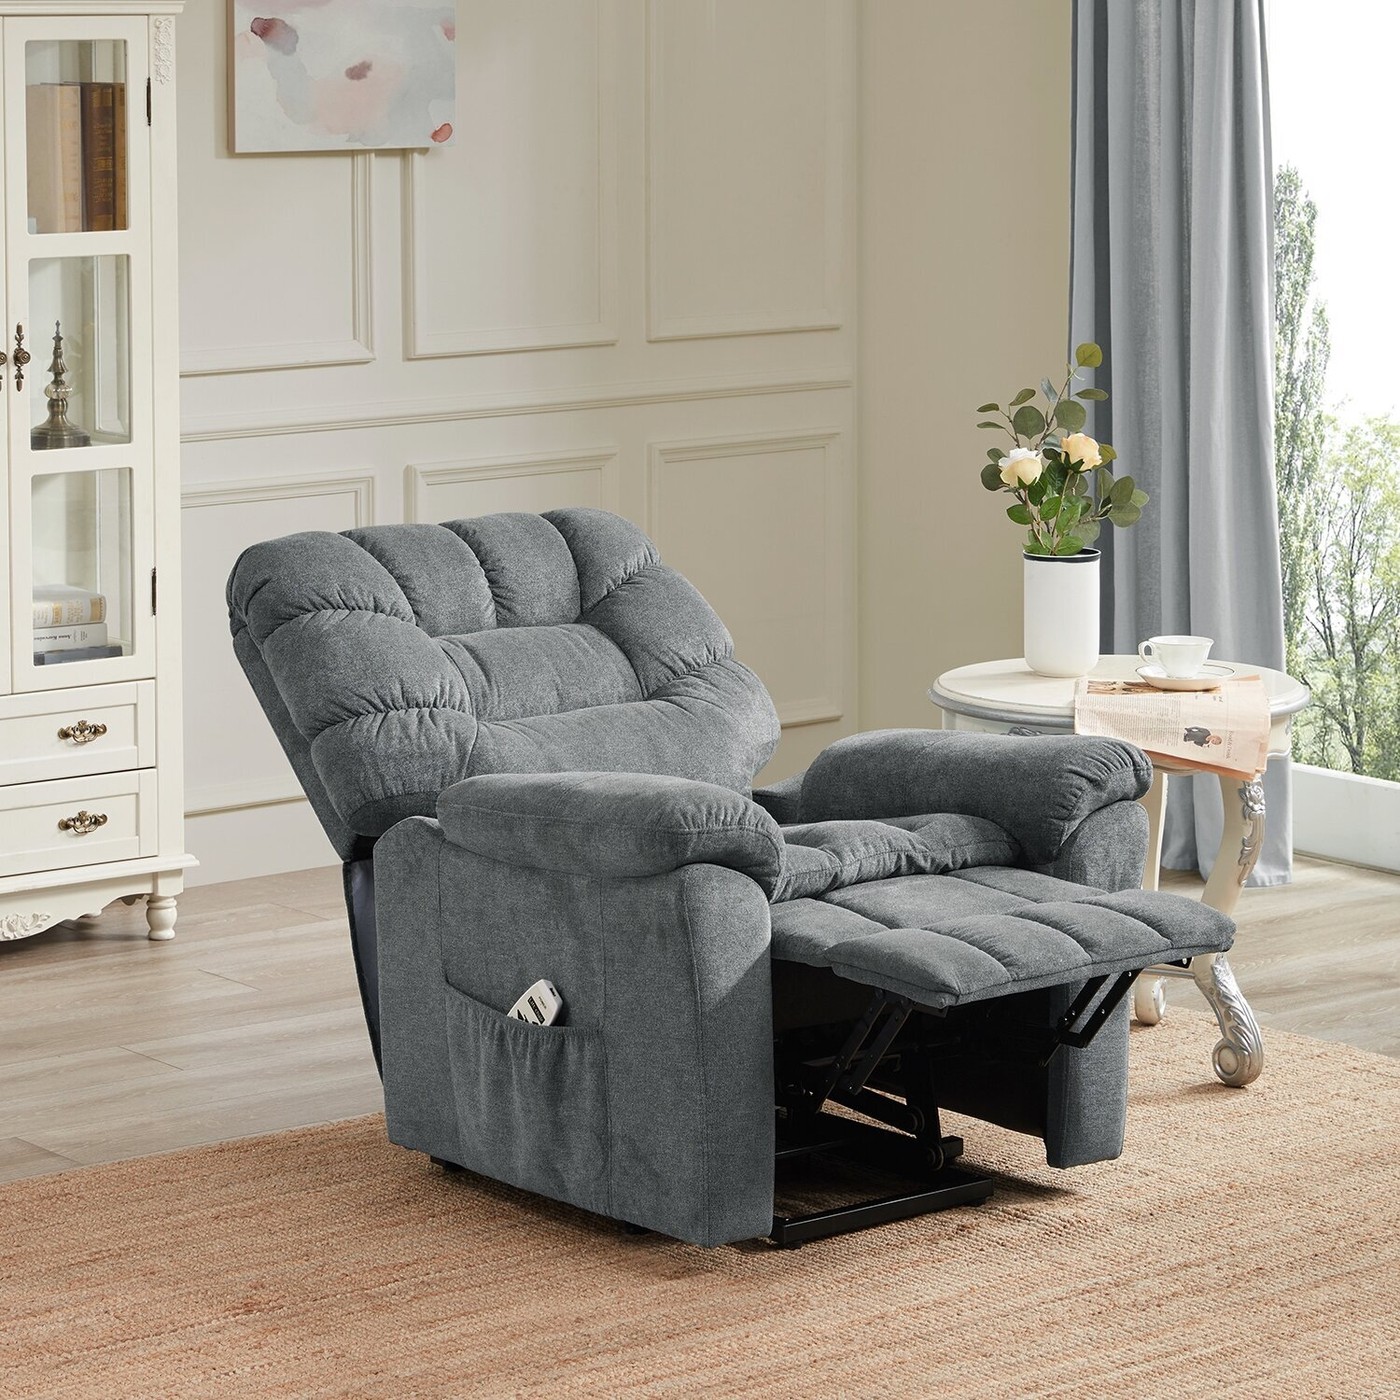 https://visualhunt.com/photos/16/power-reclining-adjustable-width-heated-massage-chair.jpeg